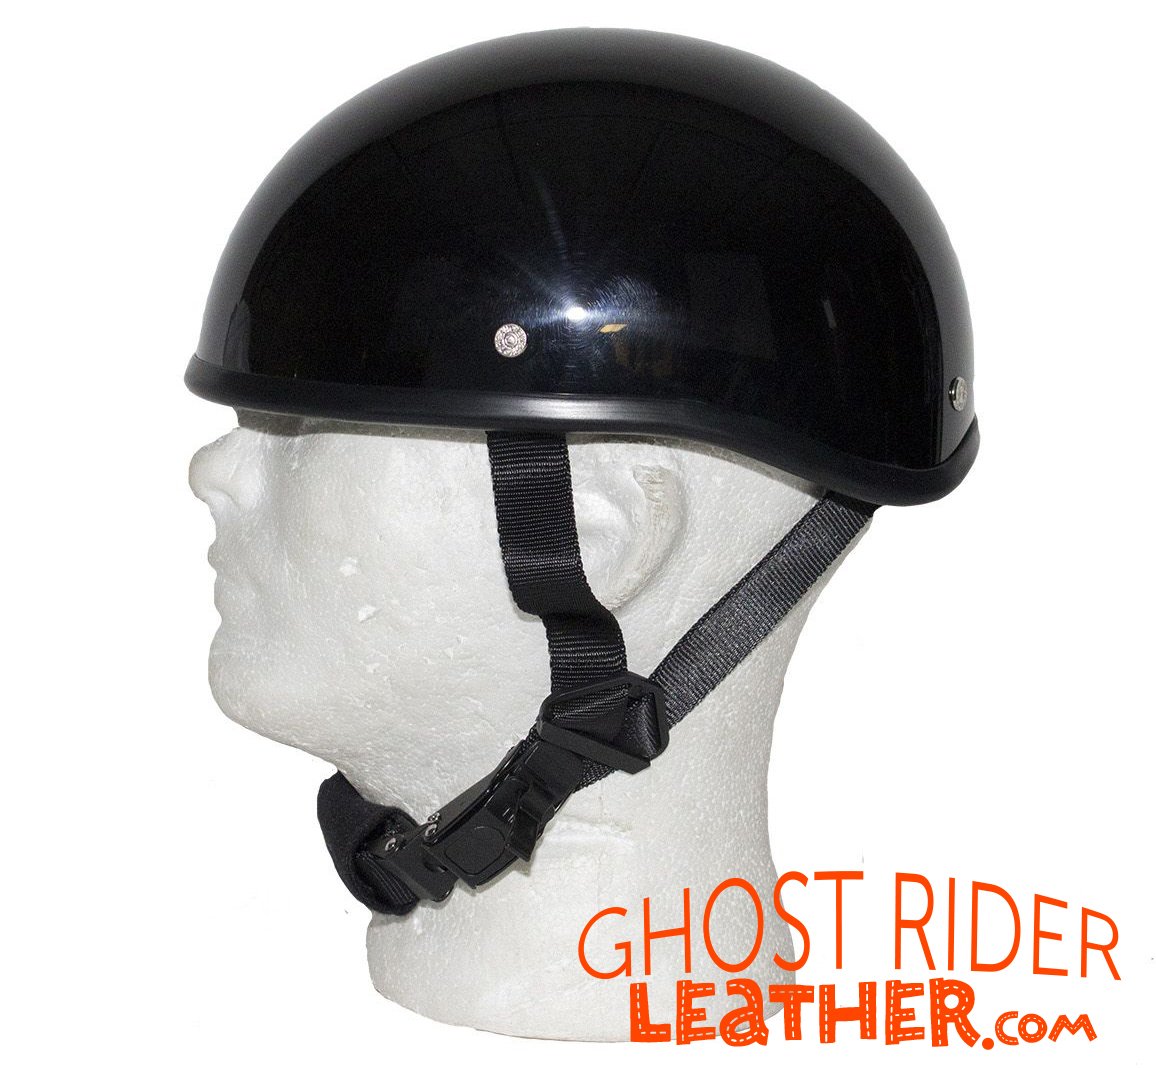 Novelty Motorcycle Helmet - Flat or Gloss Black - Classic Shorty - CLASSIC-NOV-HI Size Chart